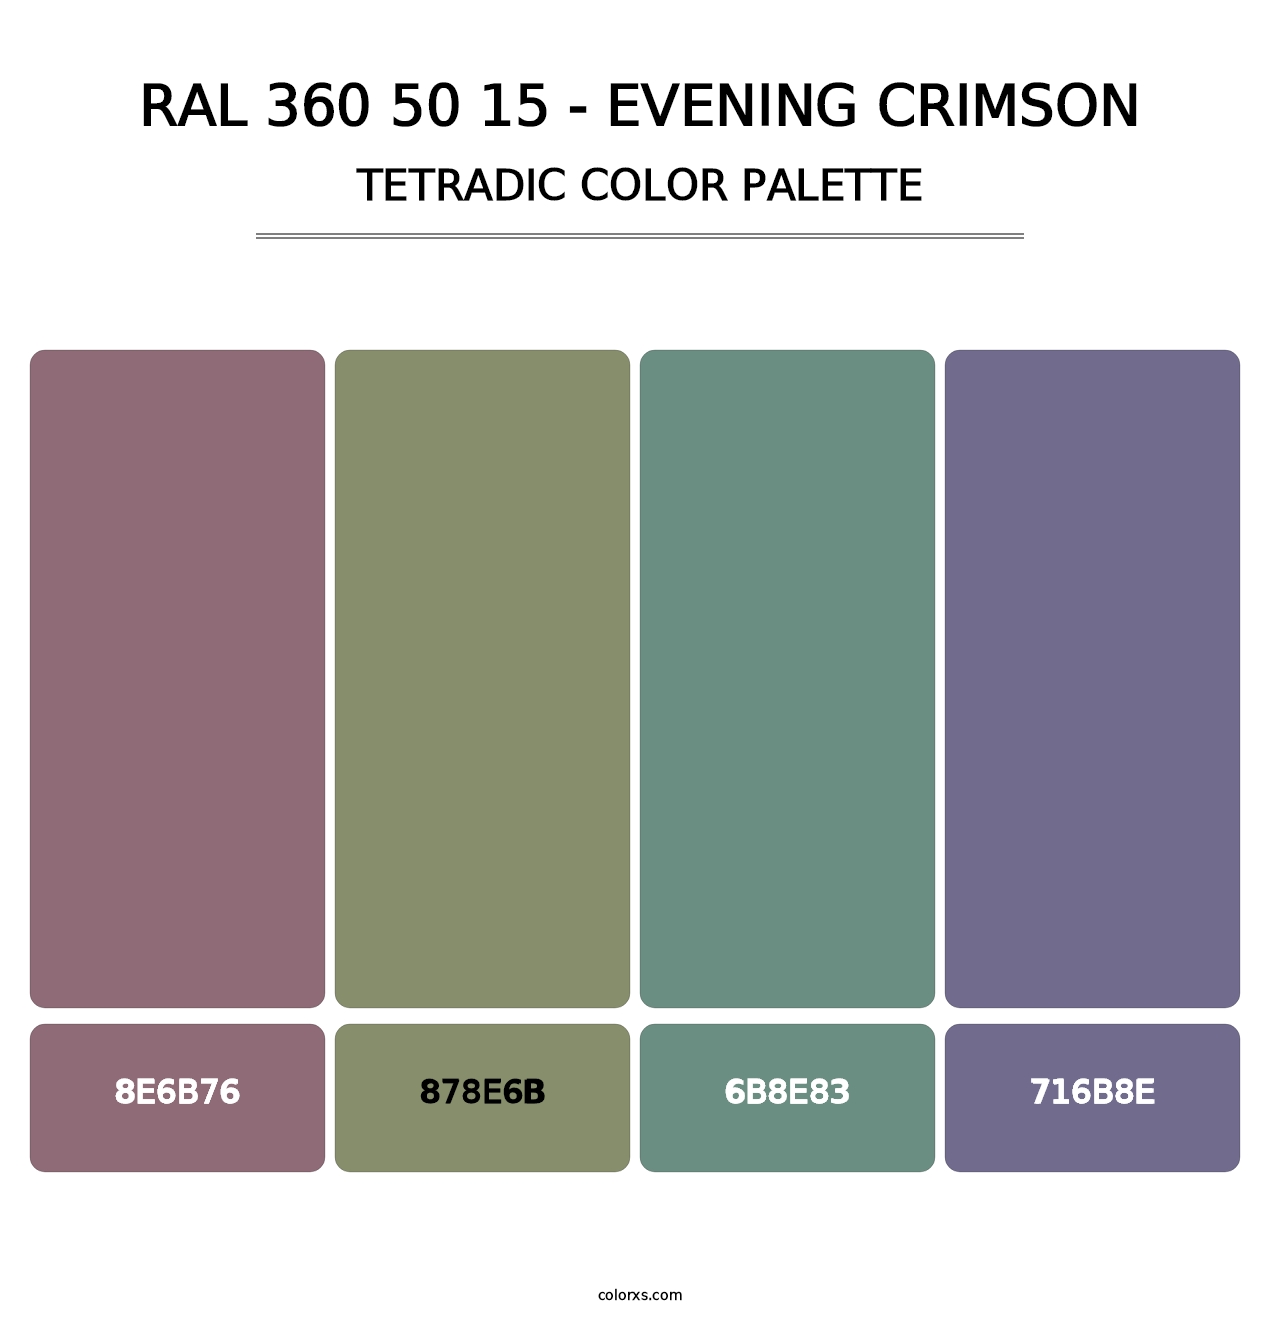 RAL 360 50 15 - Evening Crimson - Tetradic Color Palette